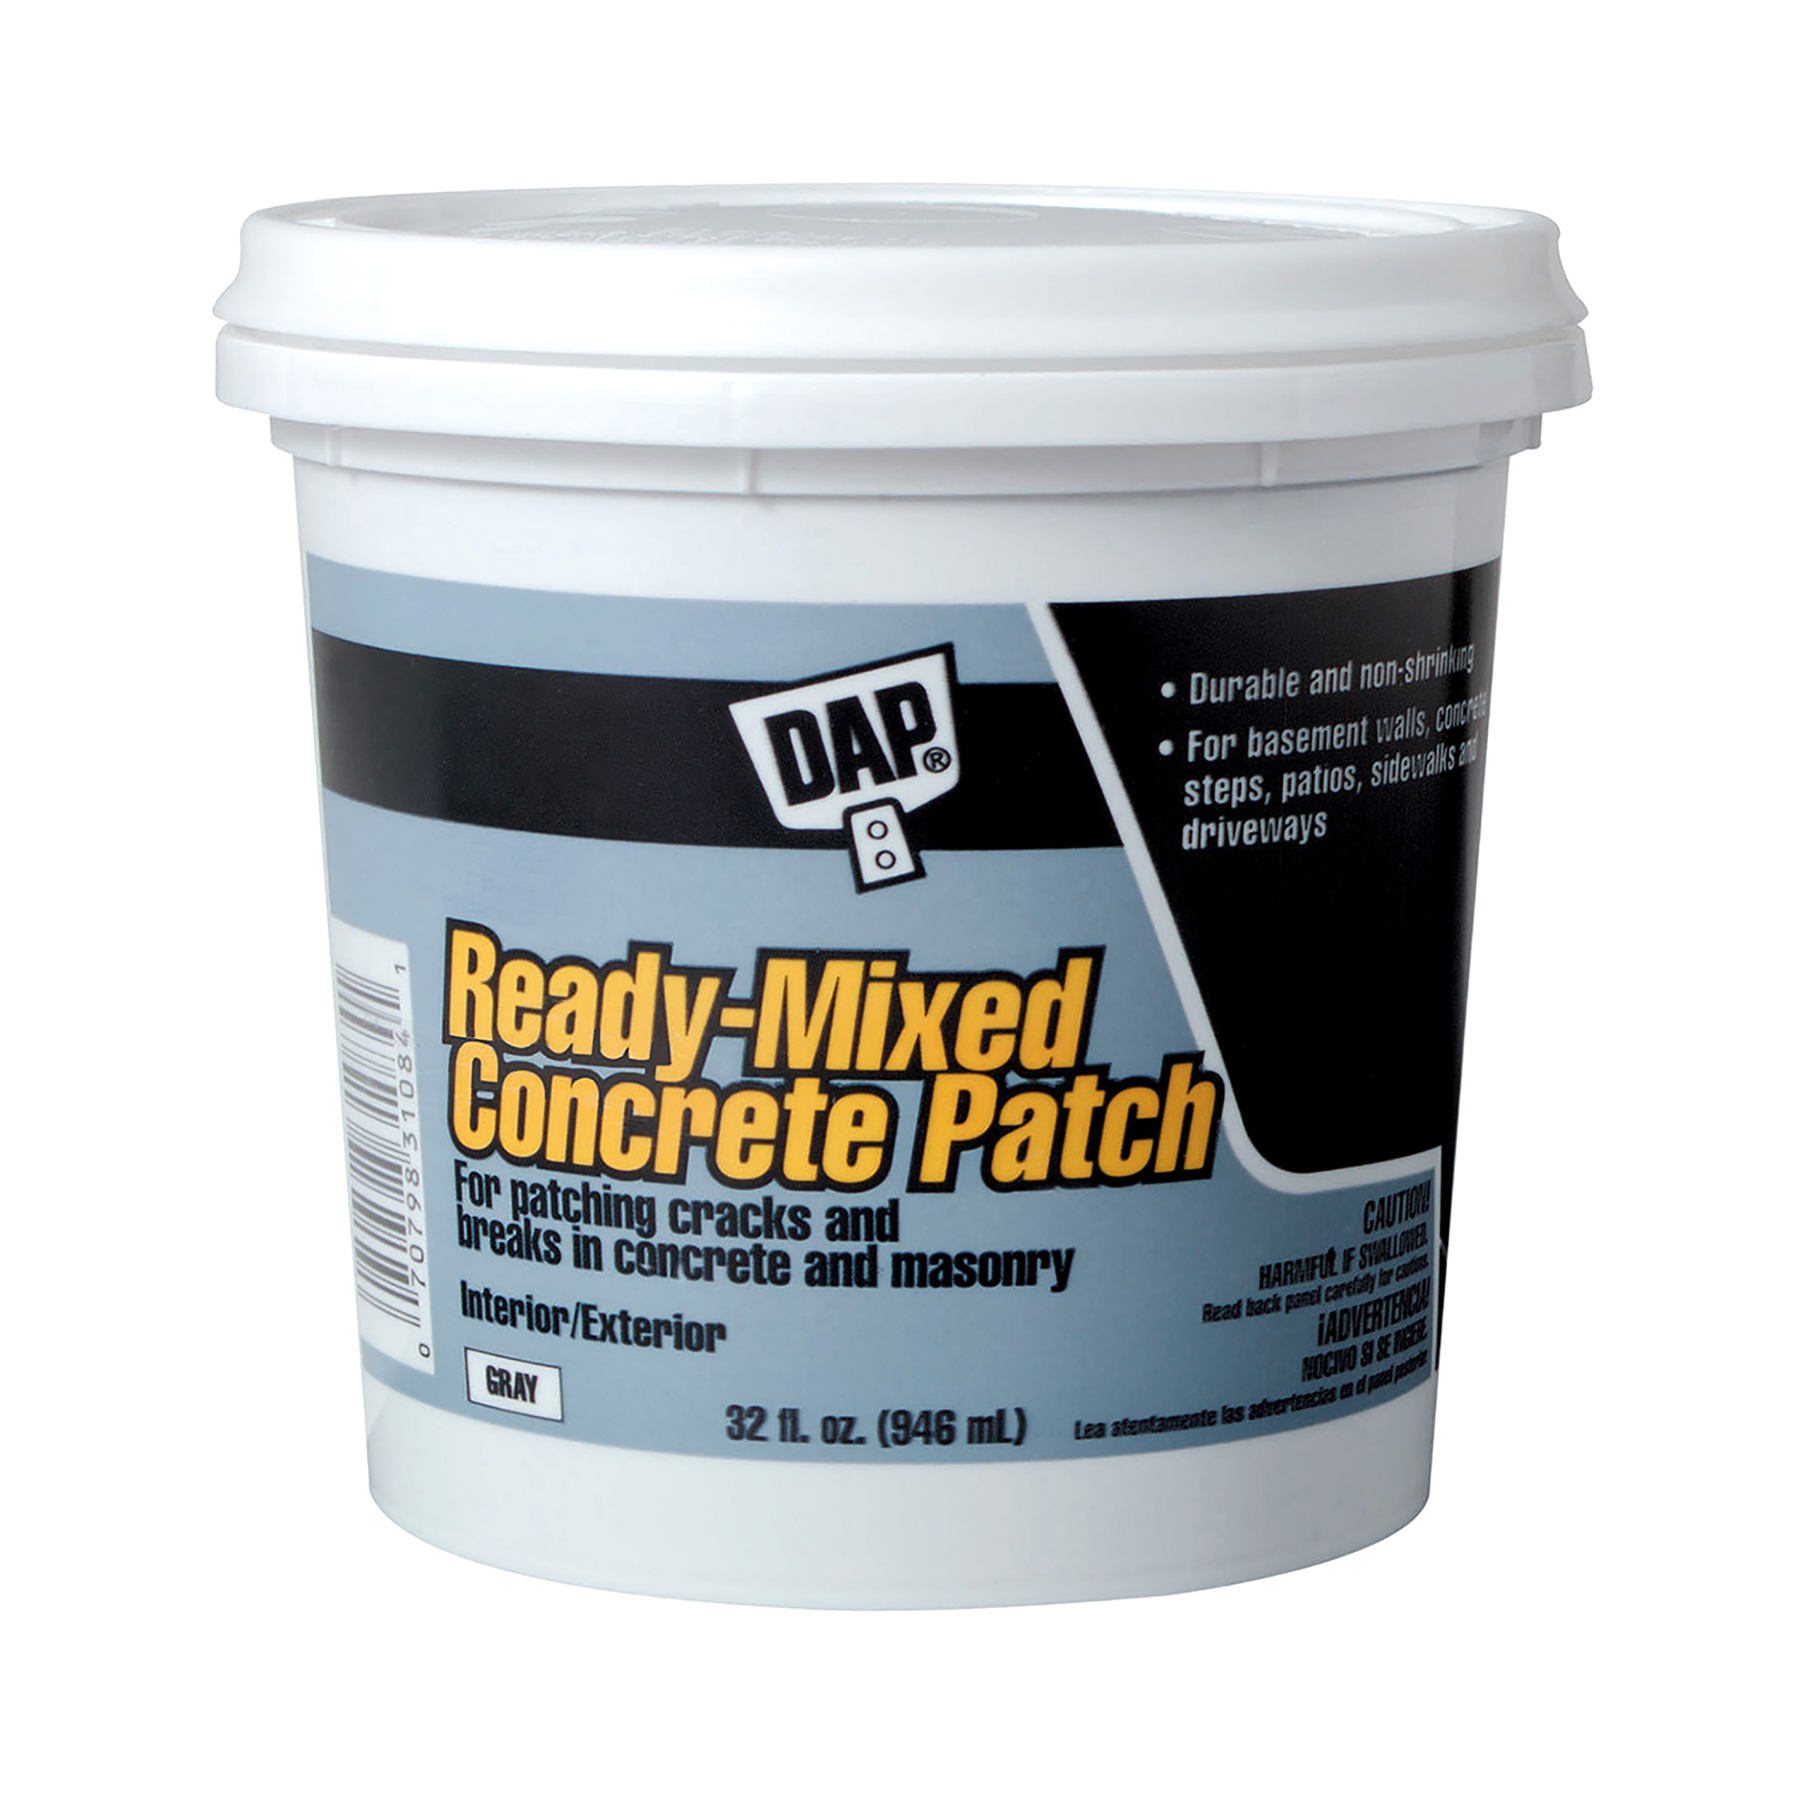 Ready-Mixed Concrete Patch